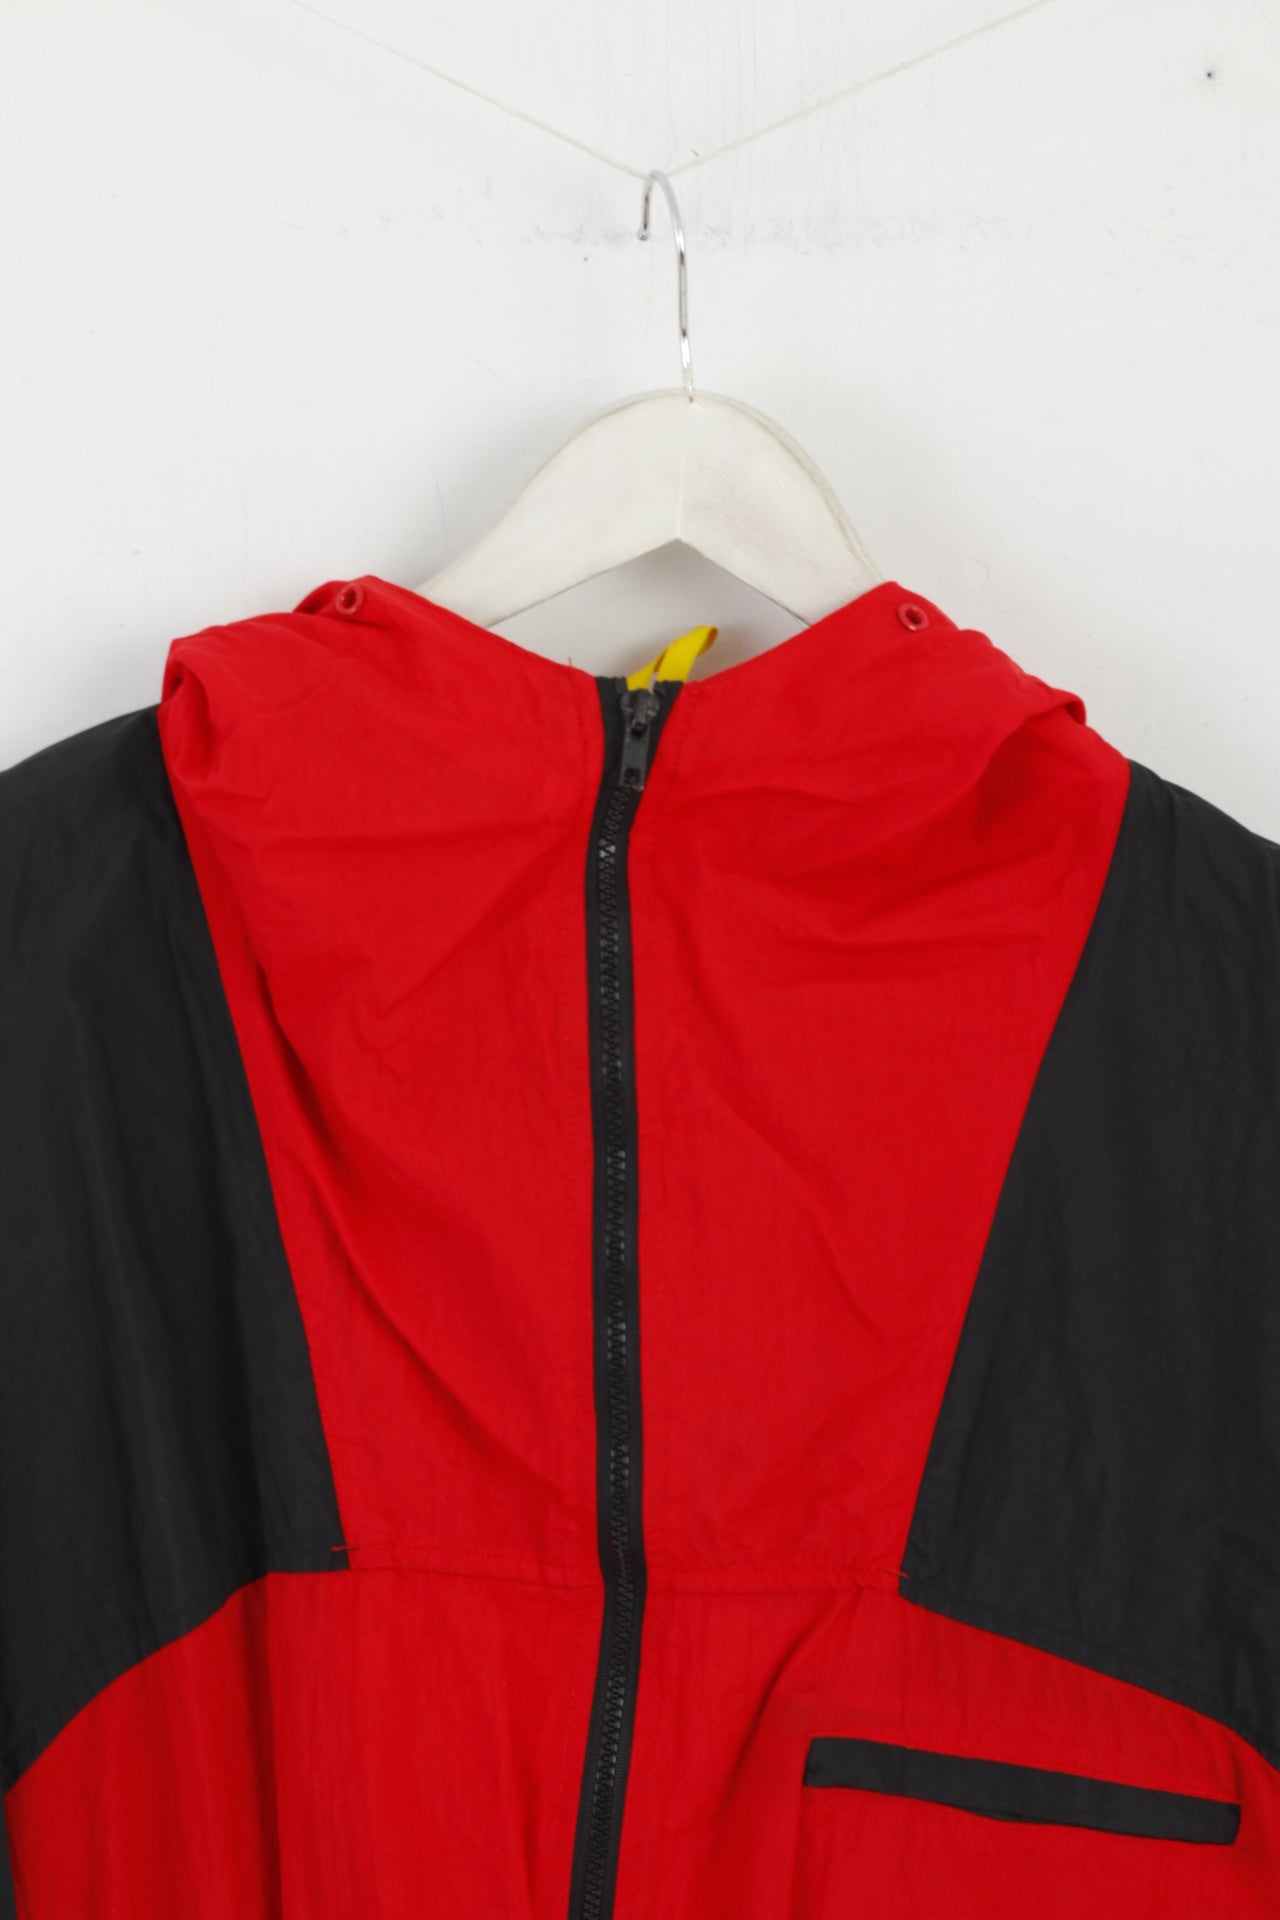 Marlboro Adventure Team Men L Jacket Nylon Red Black Vintage '90 Zip Up Top